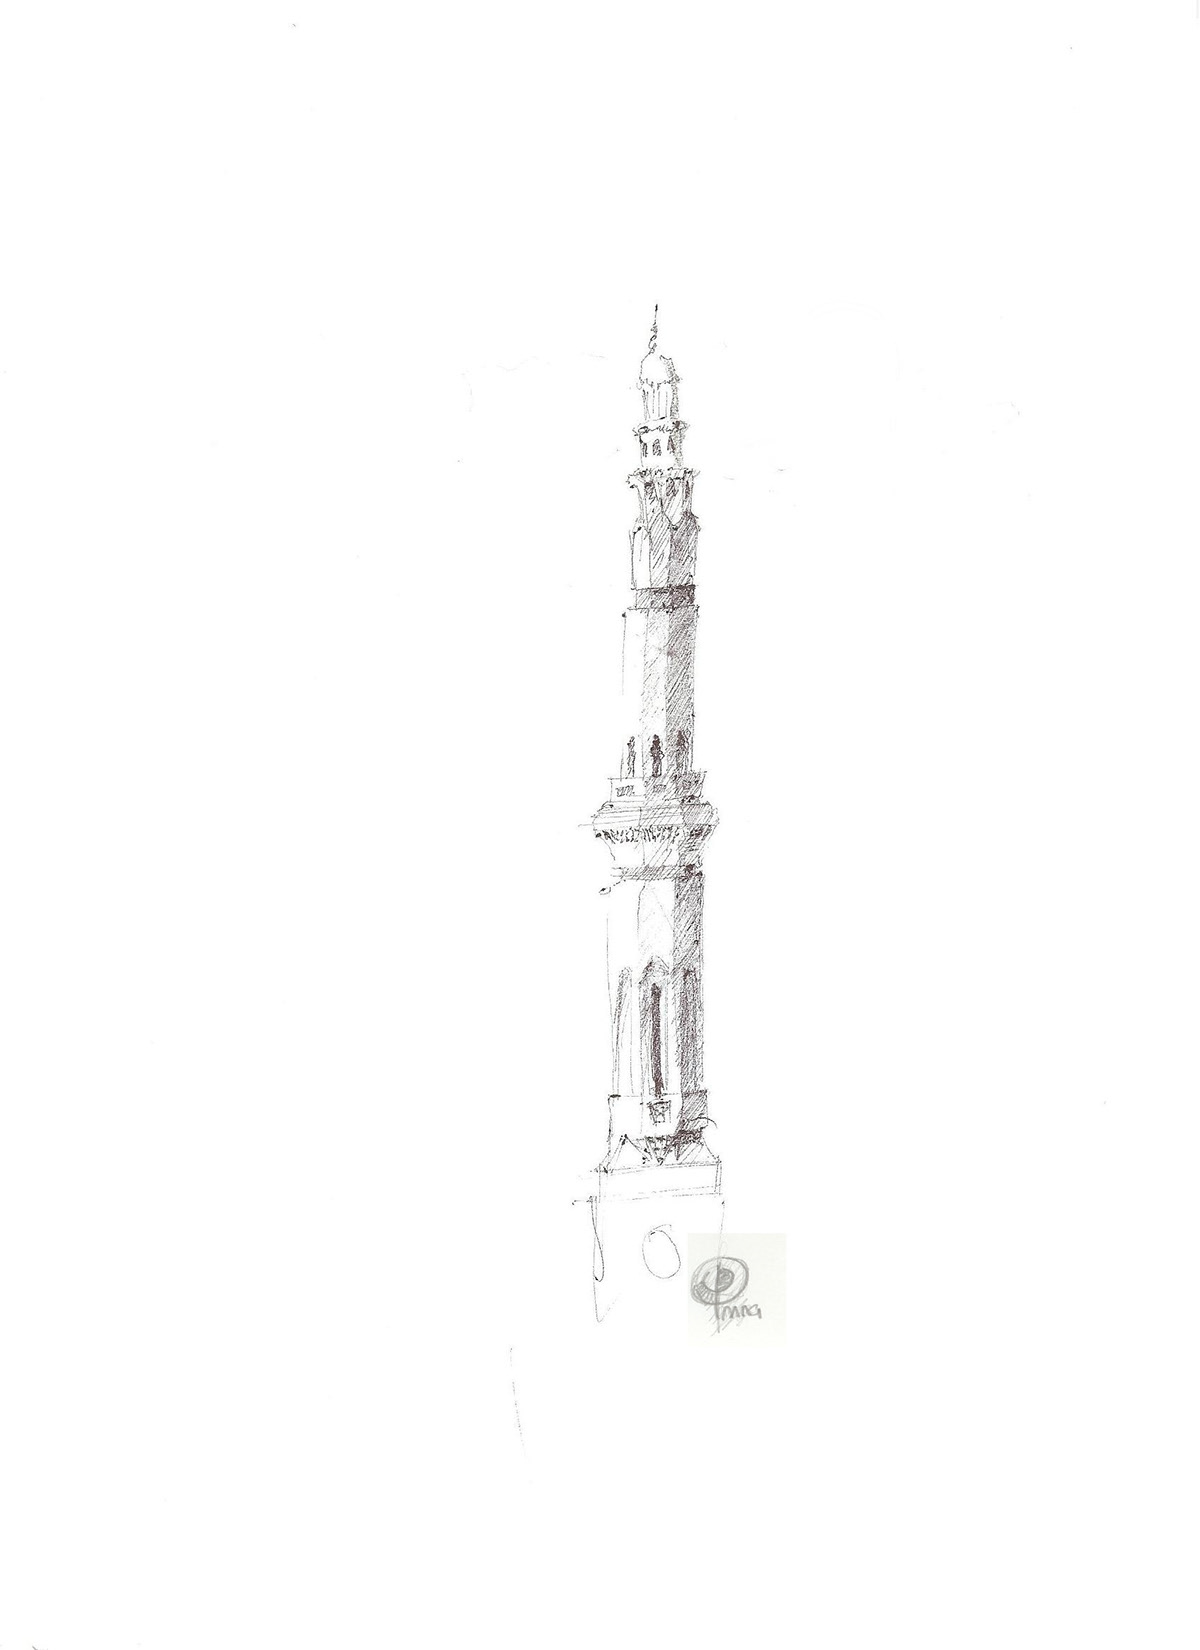 doodles sketching ink pencil city town Window minaret mosque Kaed Ibrahim Urban